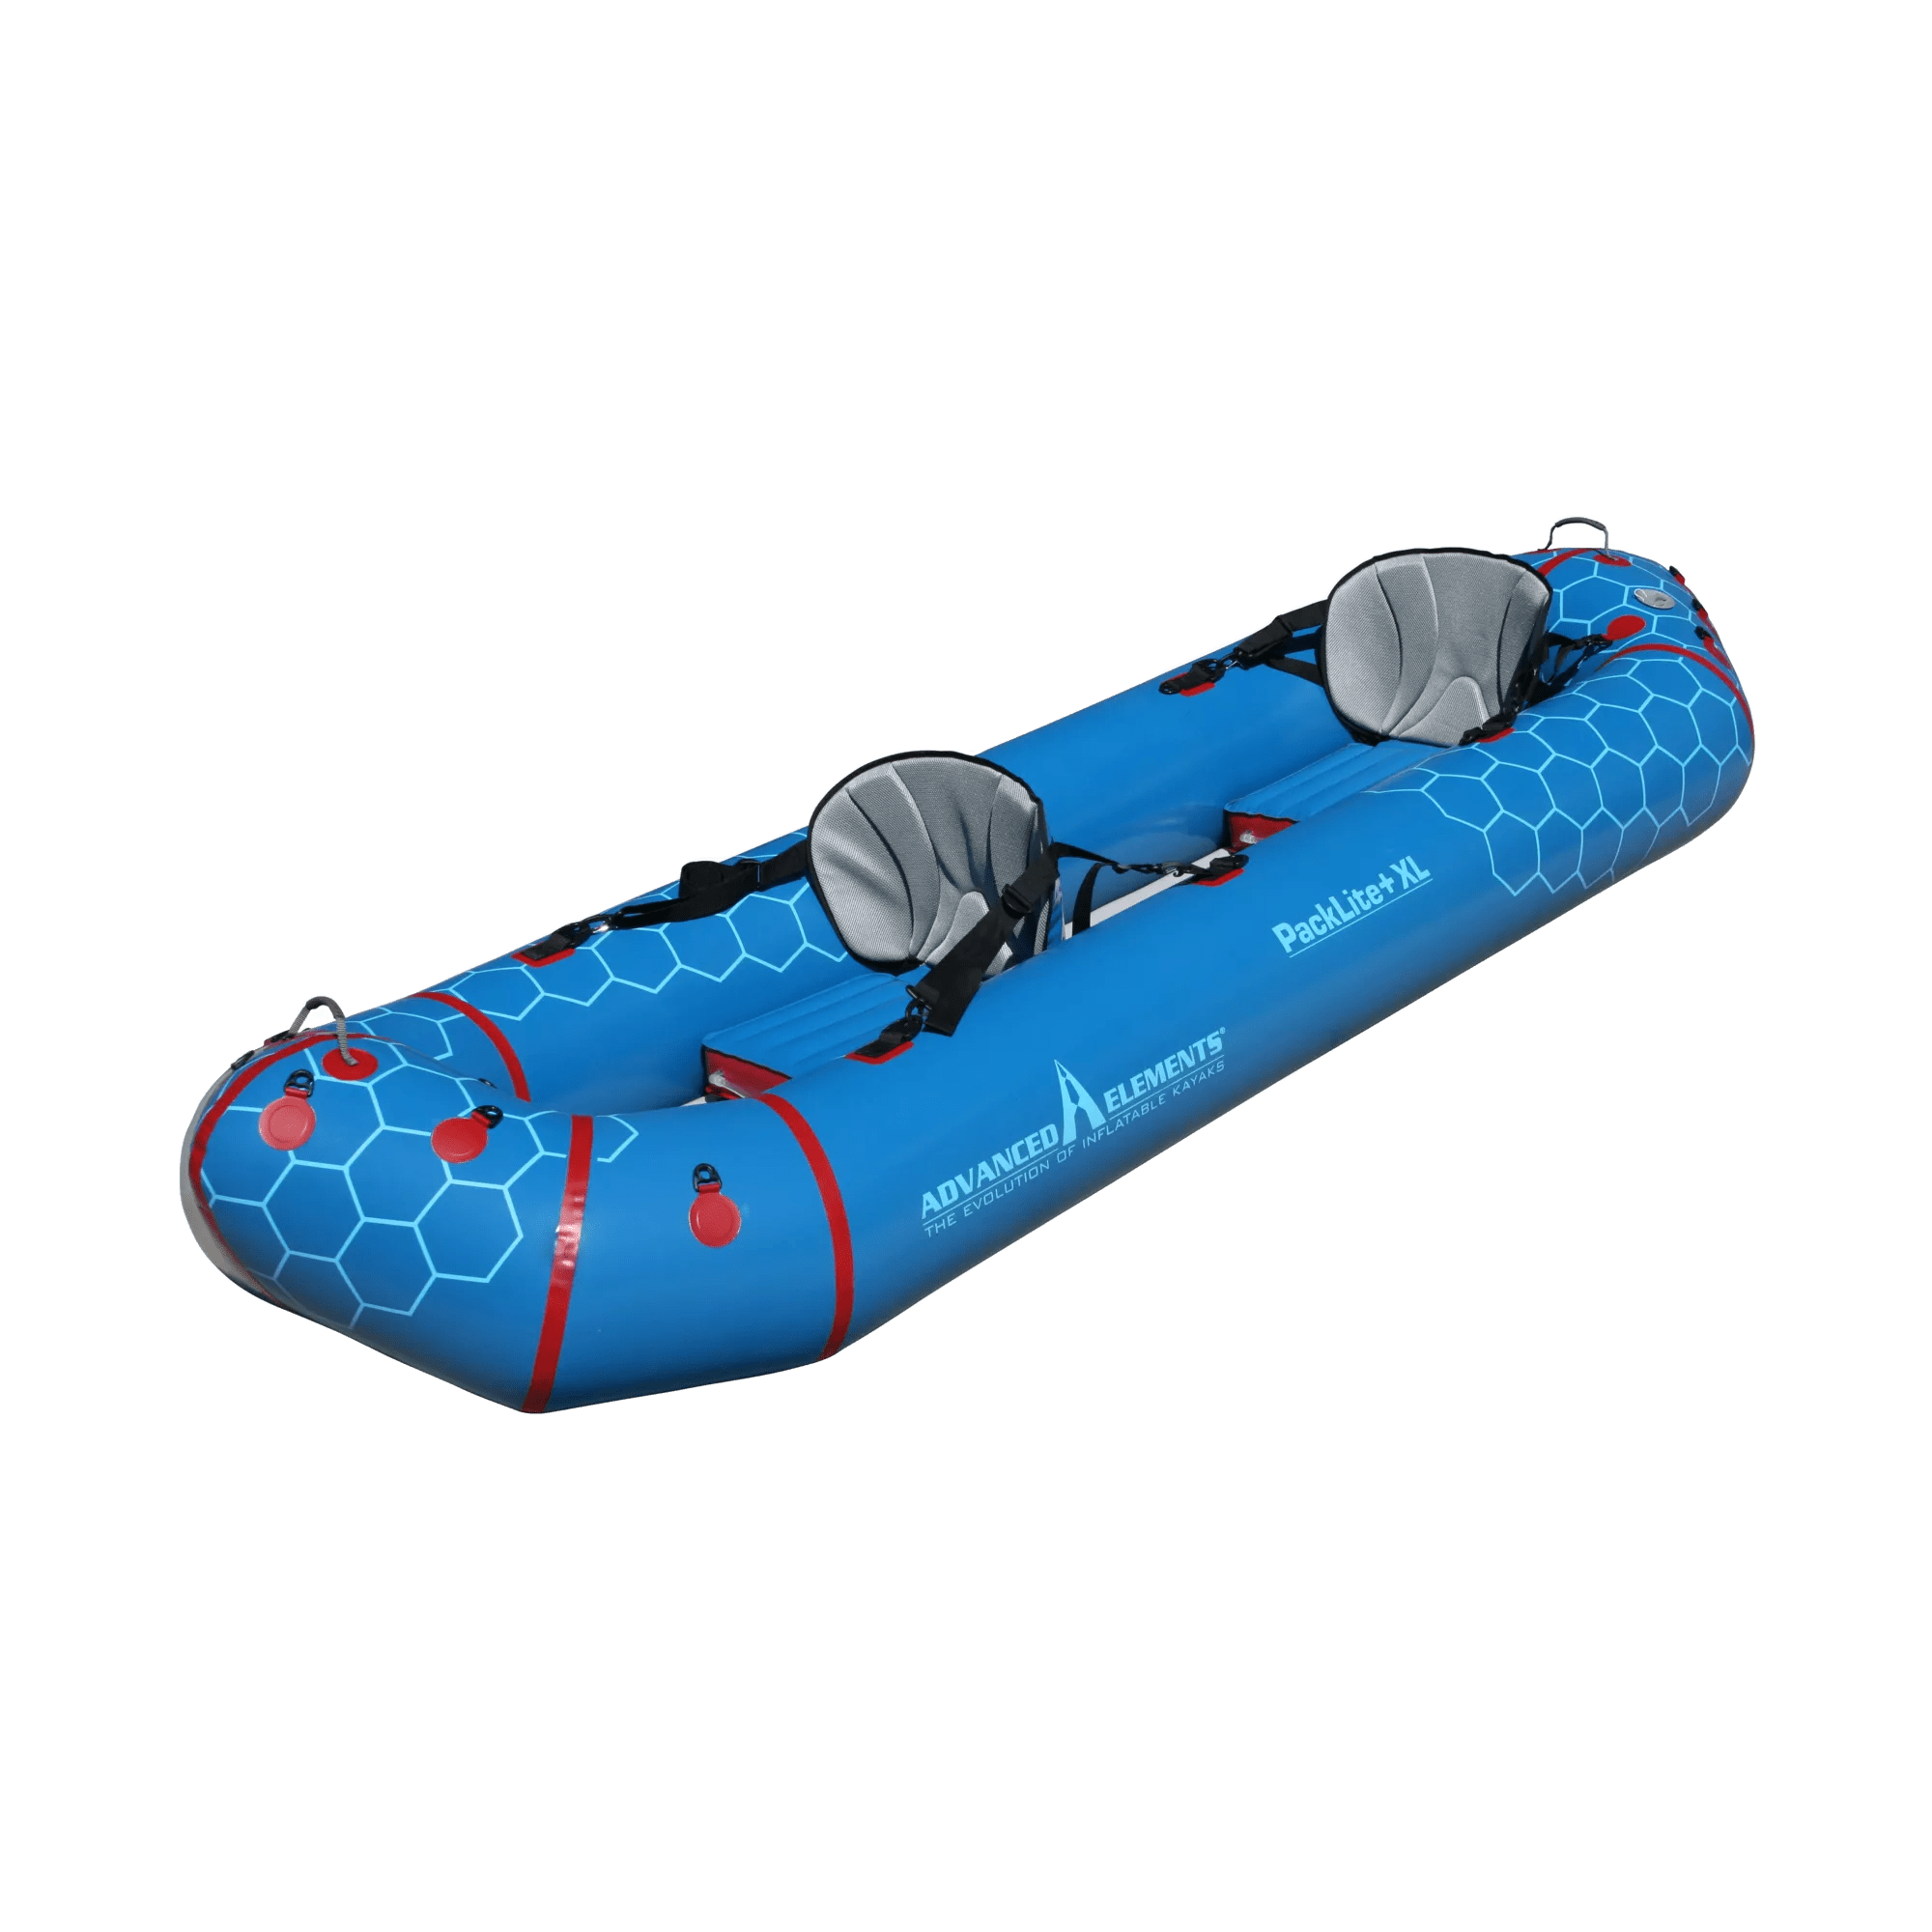 ADVANCED ELEMENTS - Kayak-radeau PackLite+ XL - White - AE3038 - ISO